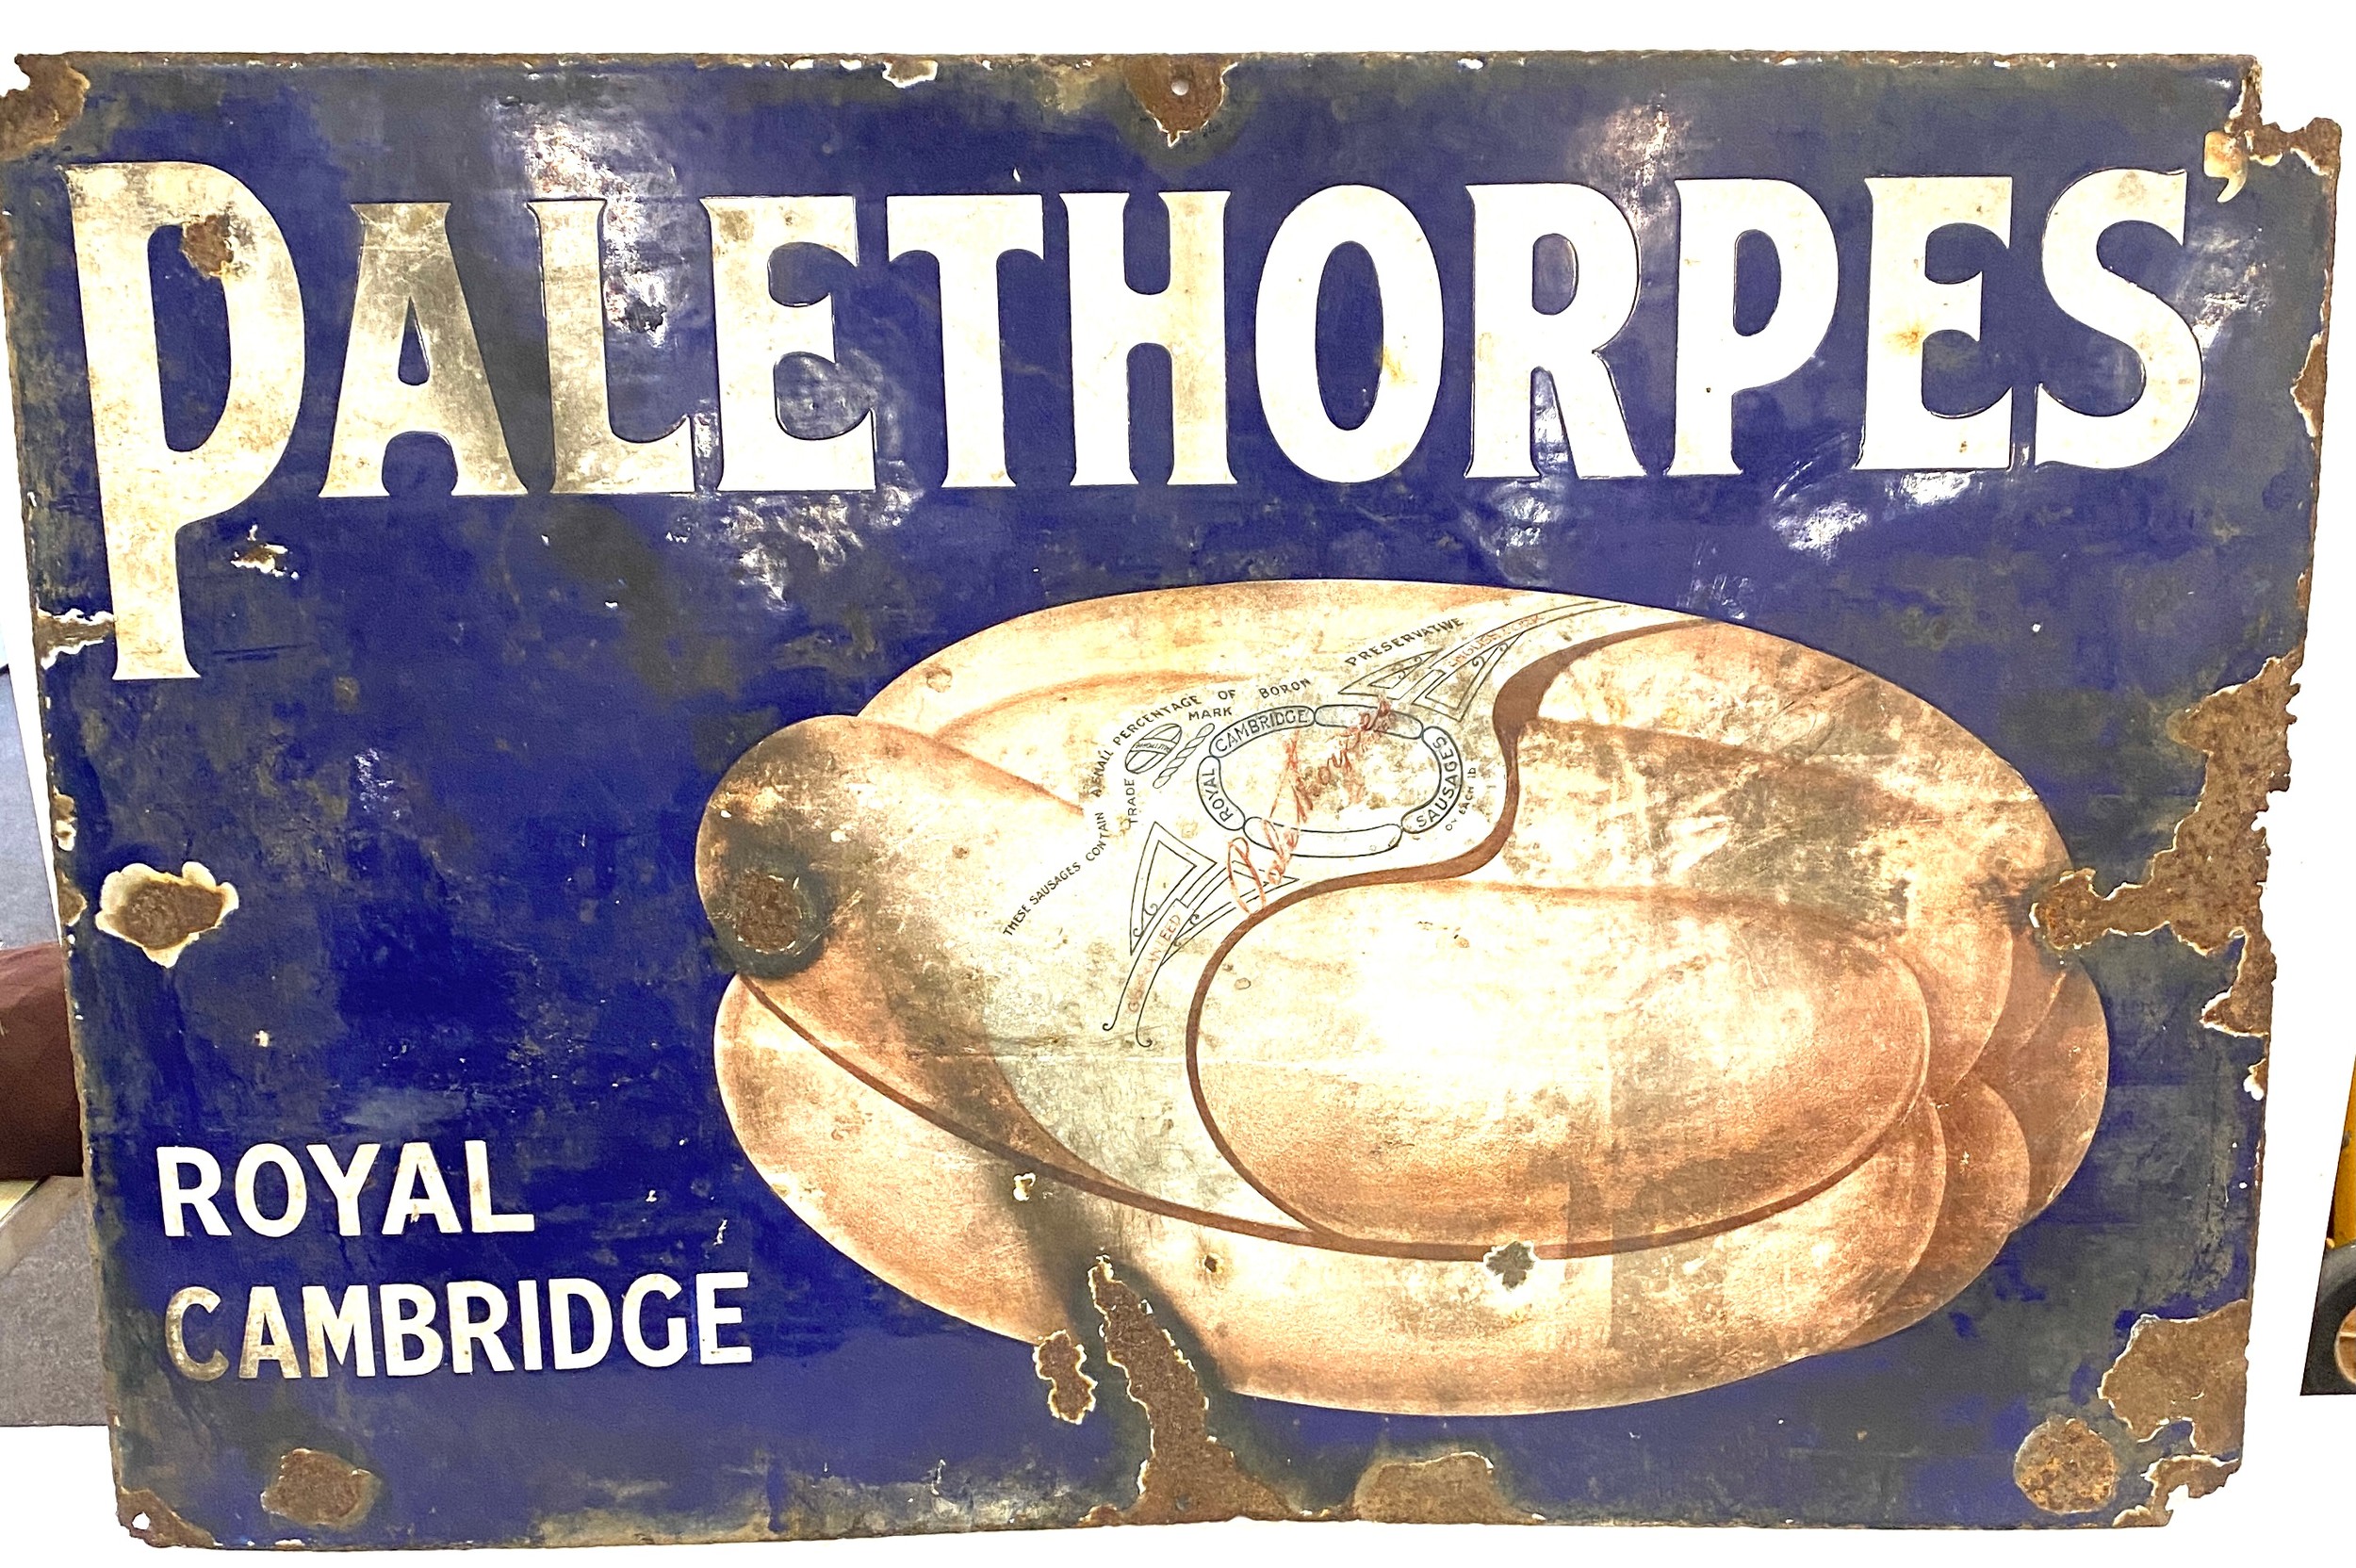 Vintage Palethorpes Royal Cambridge sausage advertising metal sign measures approx 24" tall 36"